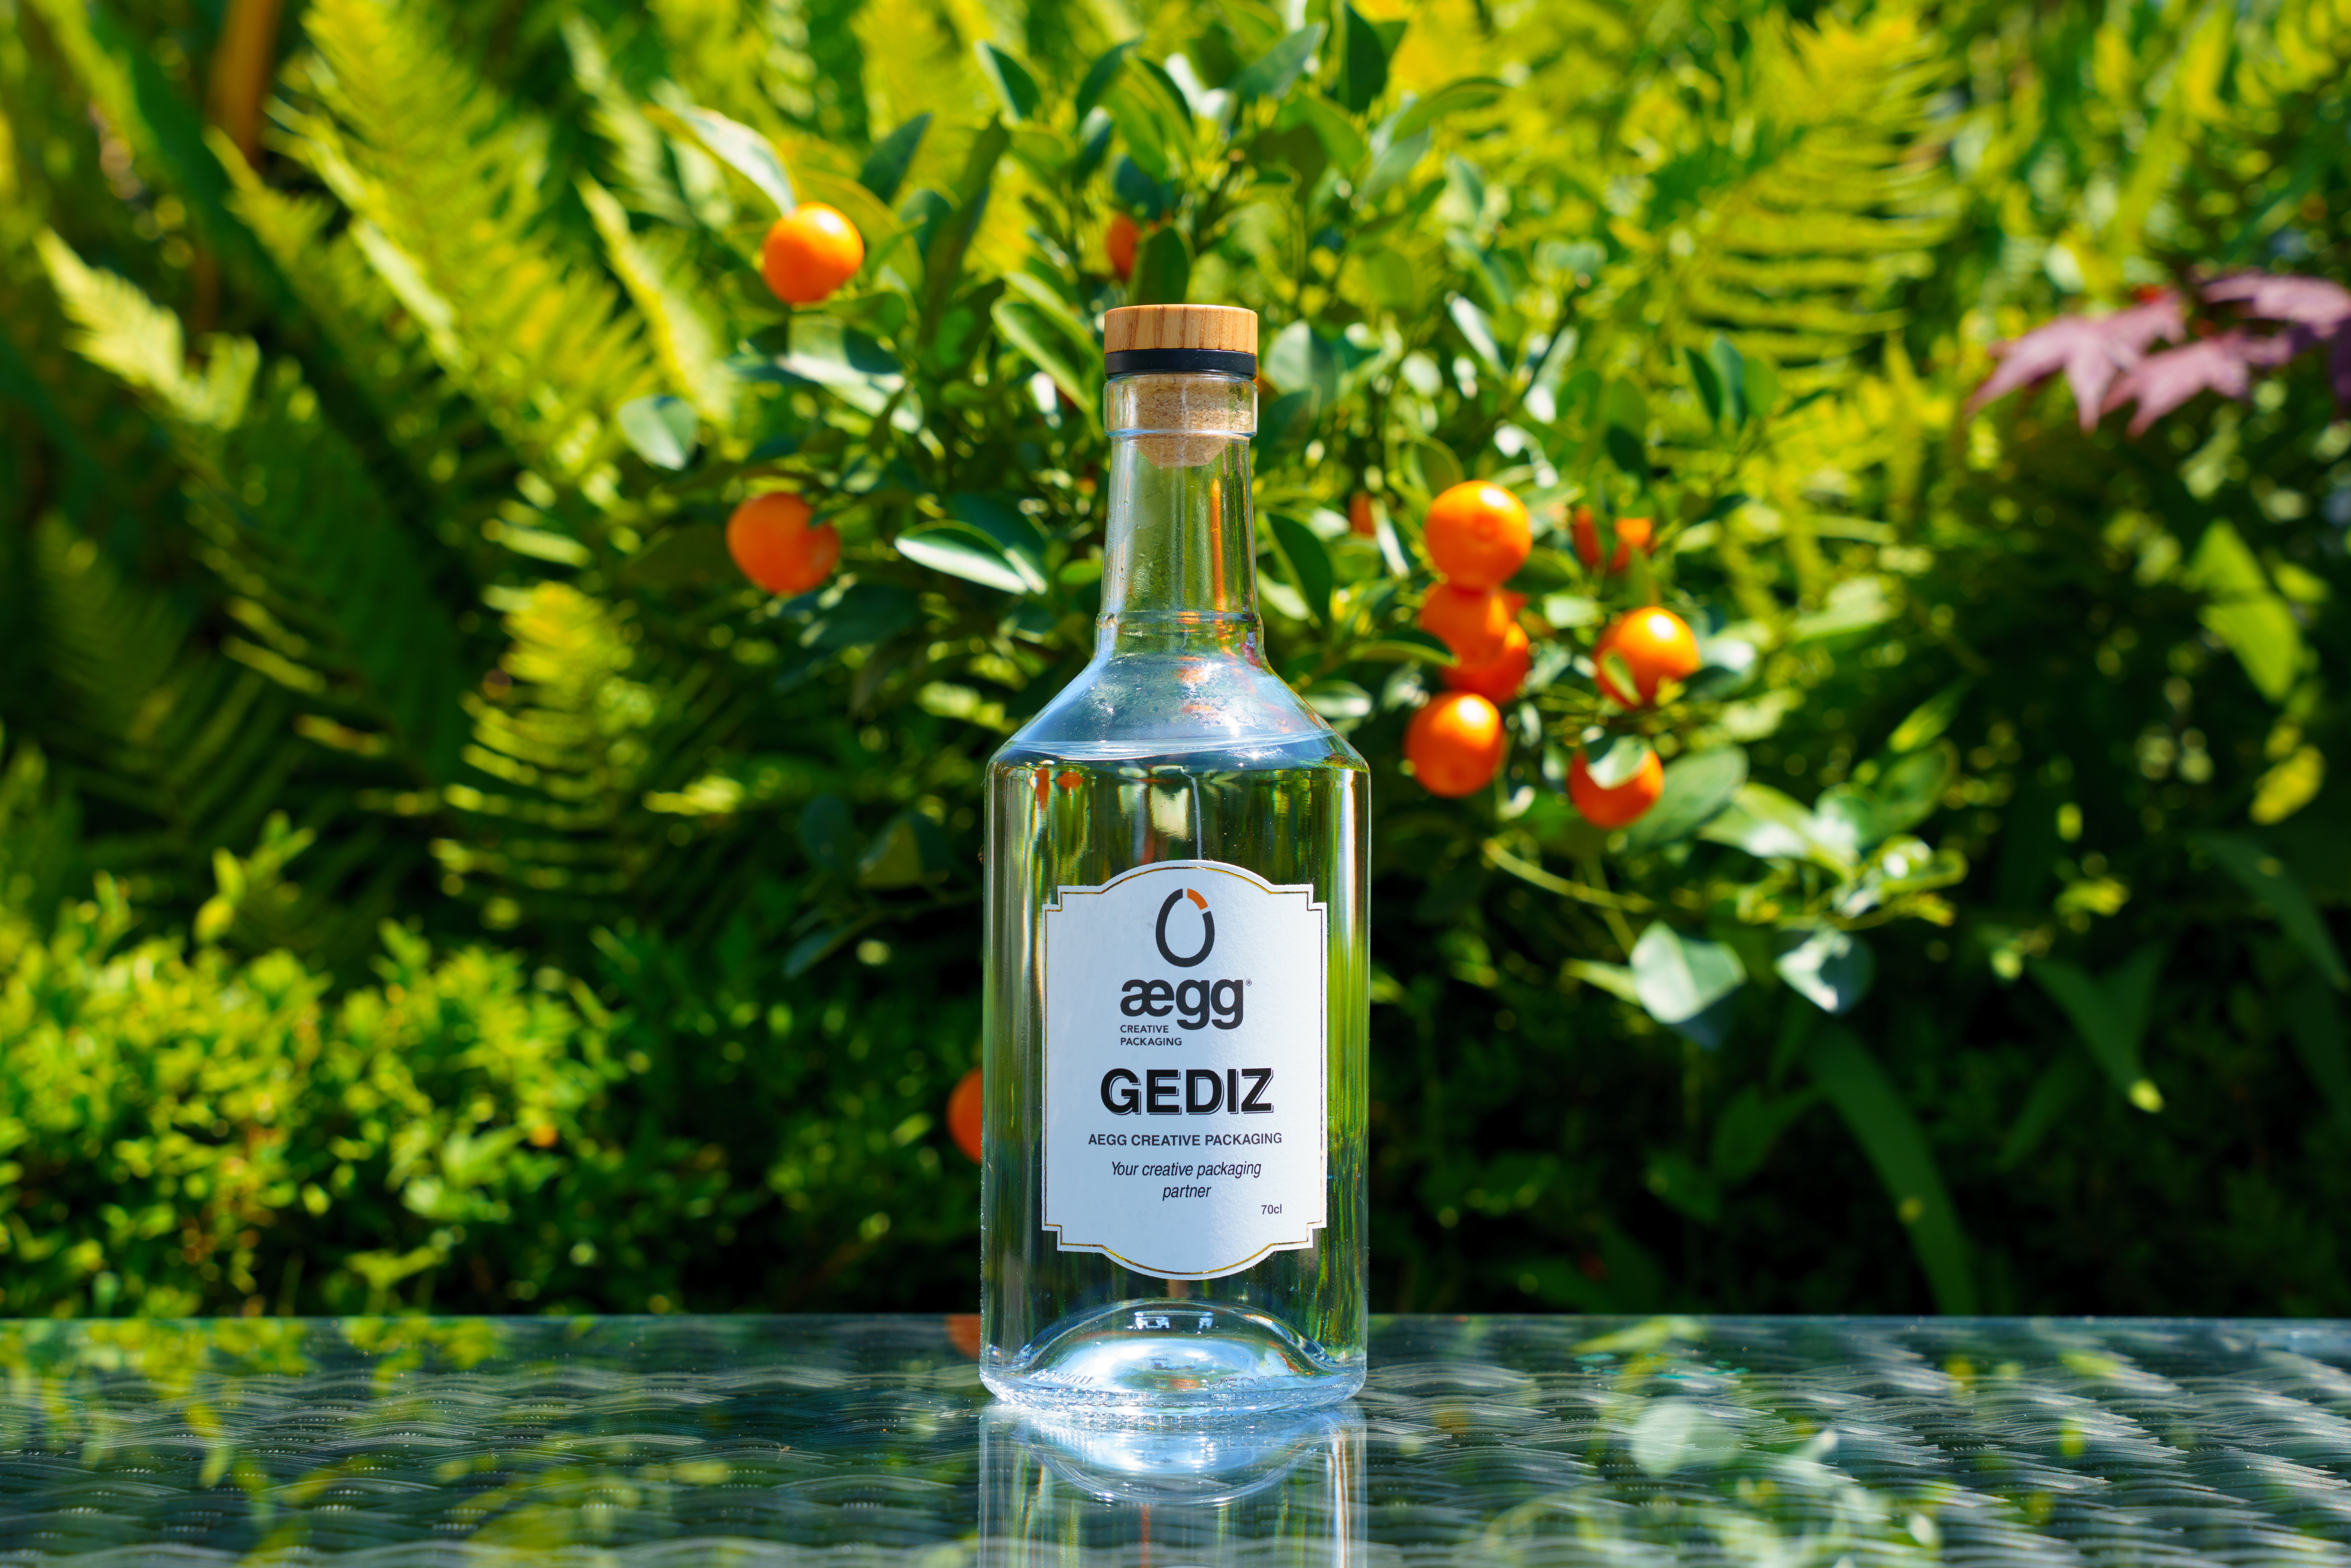 Aegg's Gediz spirit bottle pictured in a sunny garden